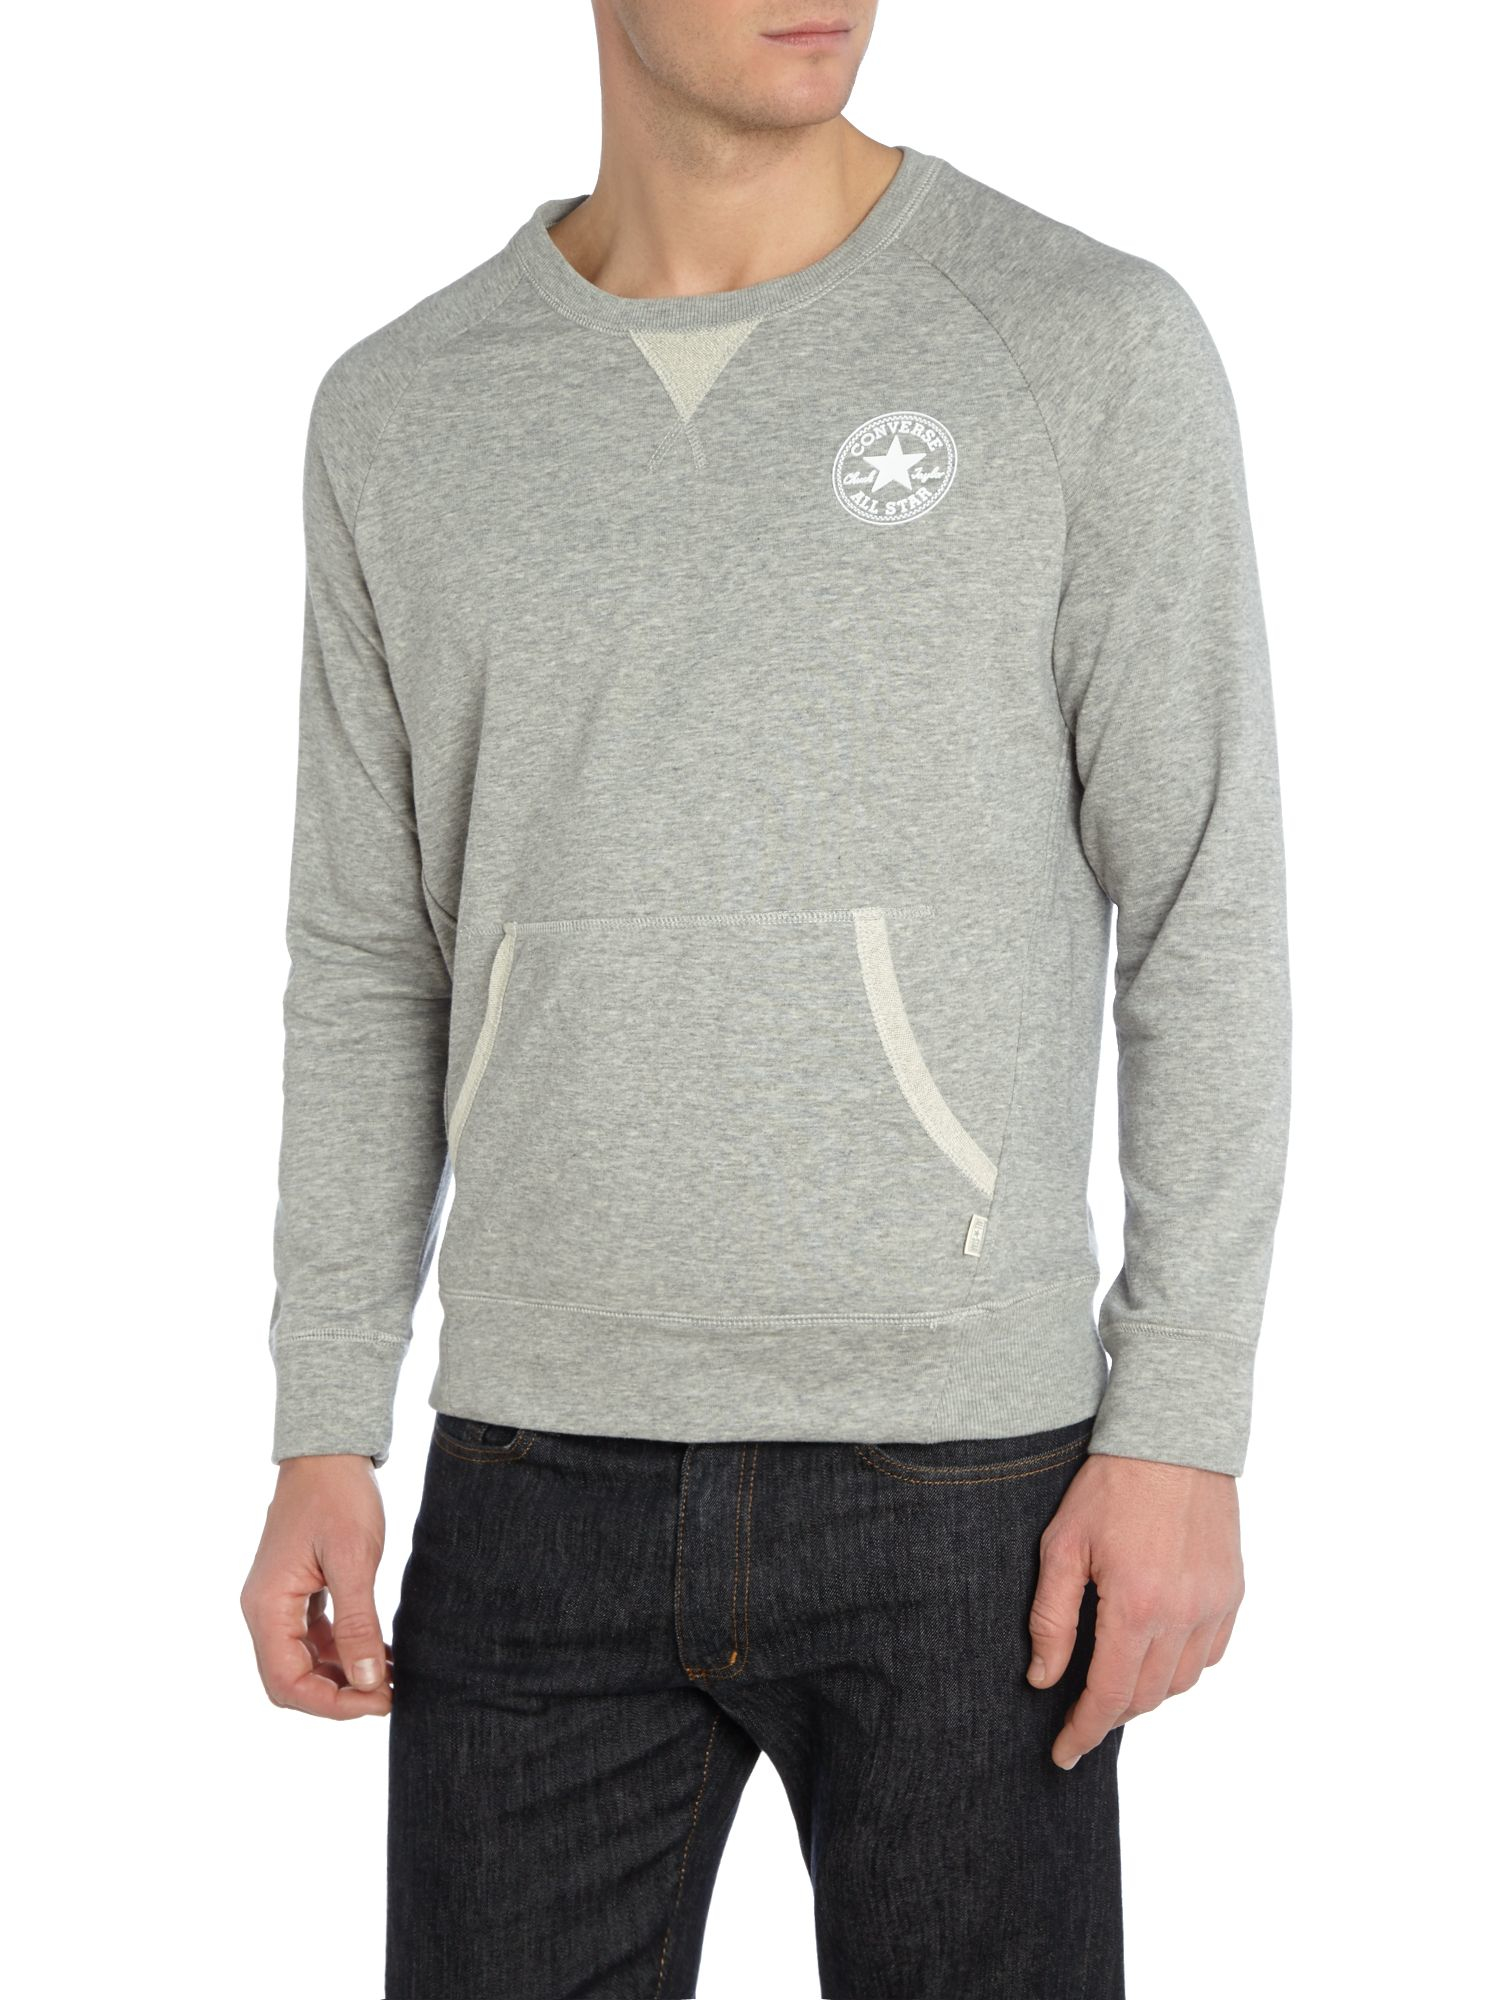 Download Converse Crew Neck Raglan Front Pocket Sweatshirt in Gray ...